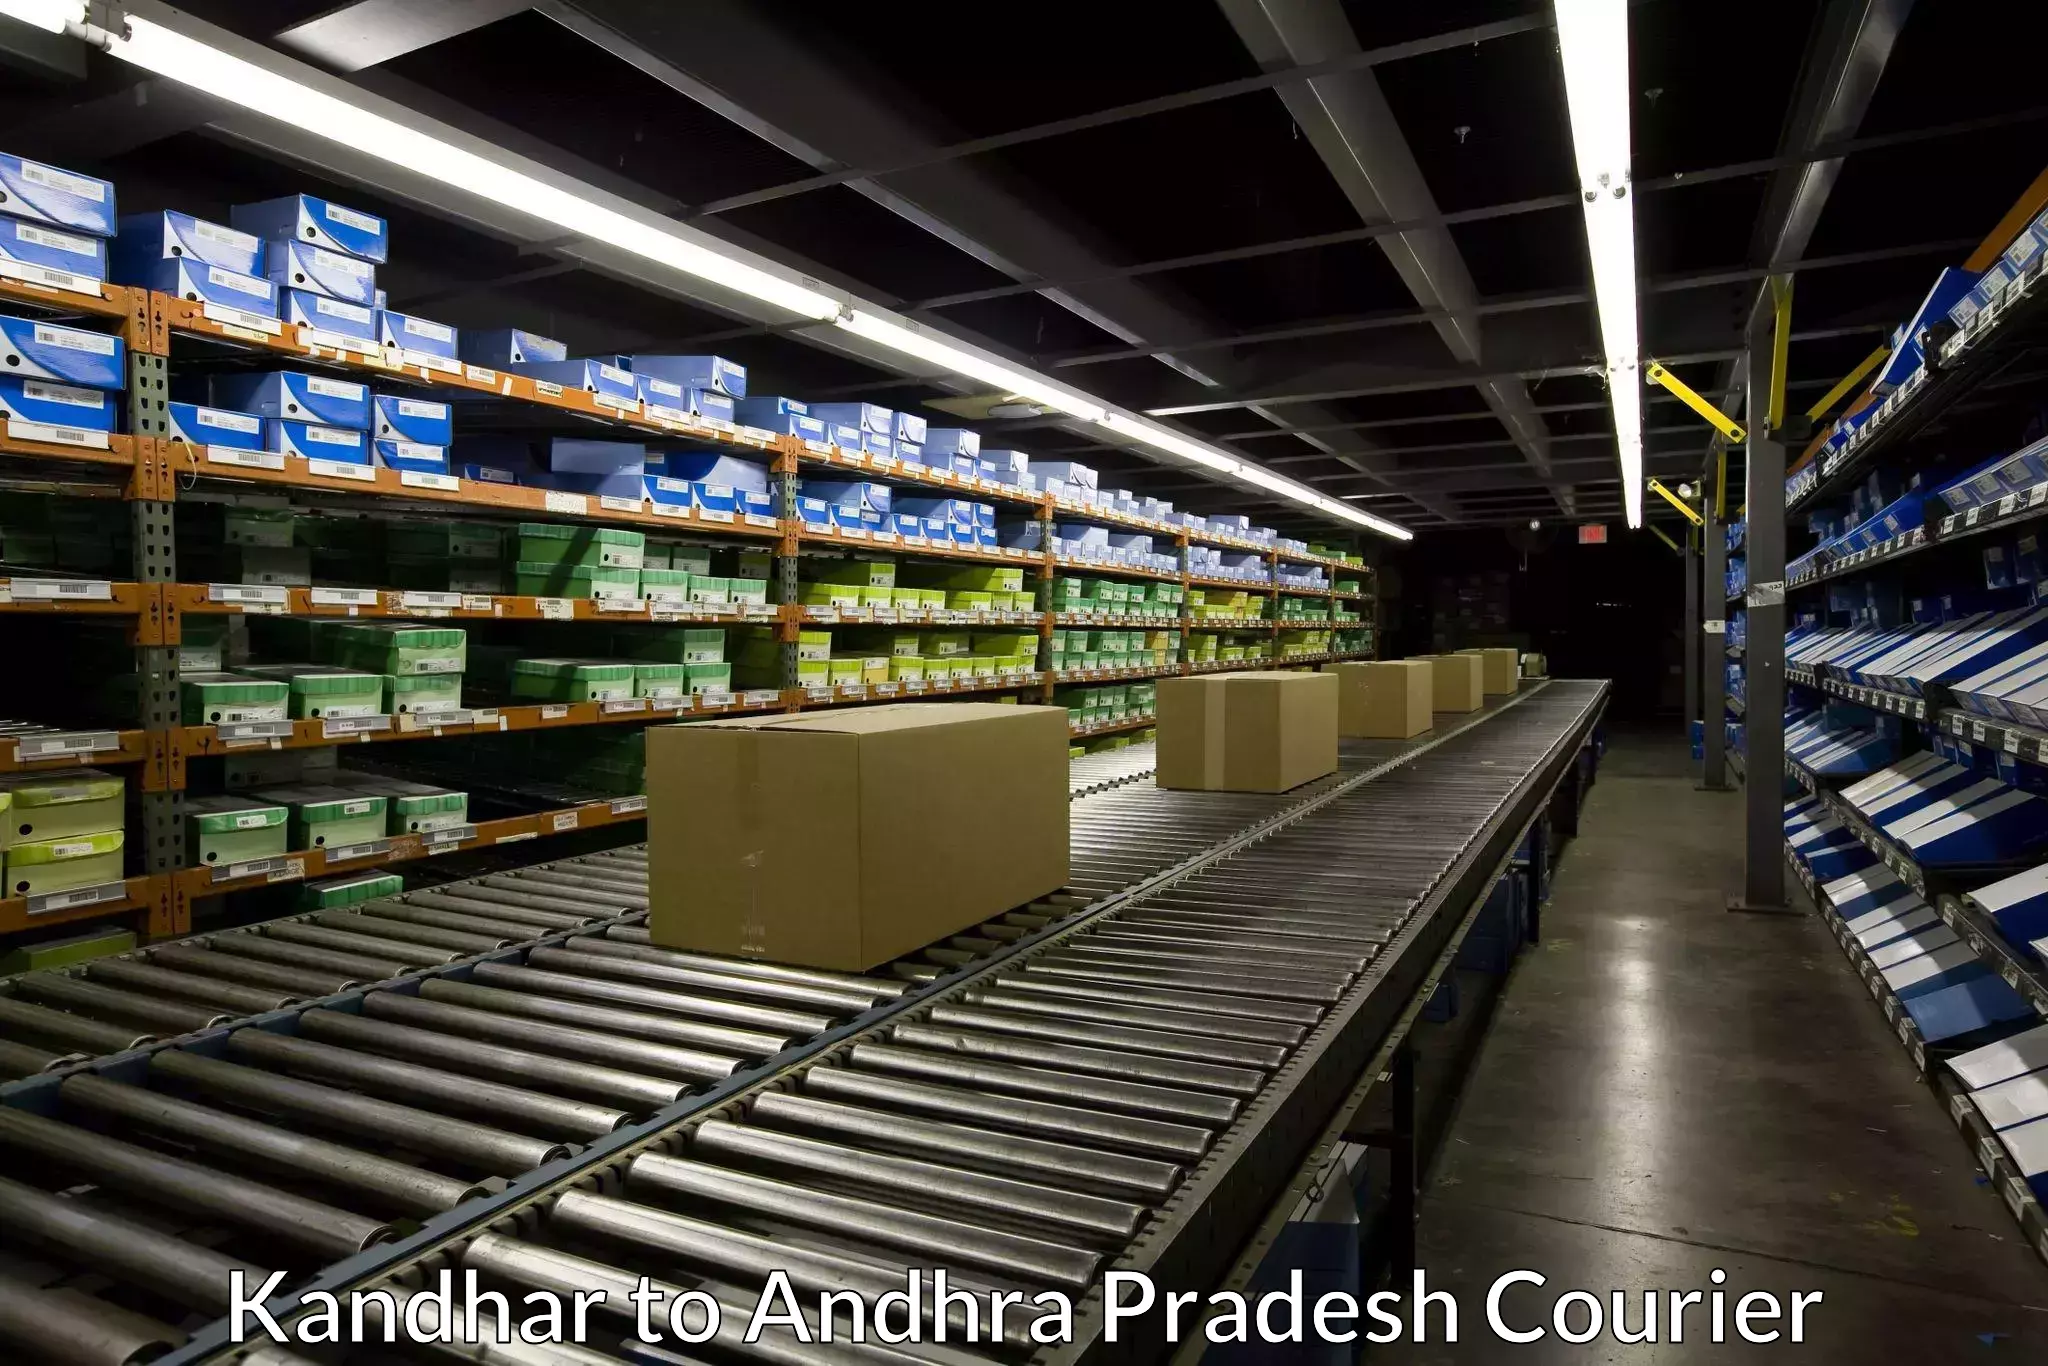 Express logistics providers Kandhar to Machilipatnam